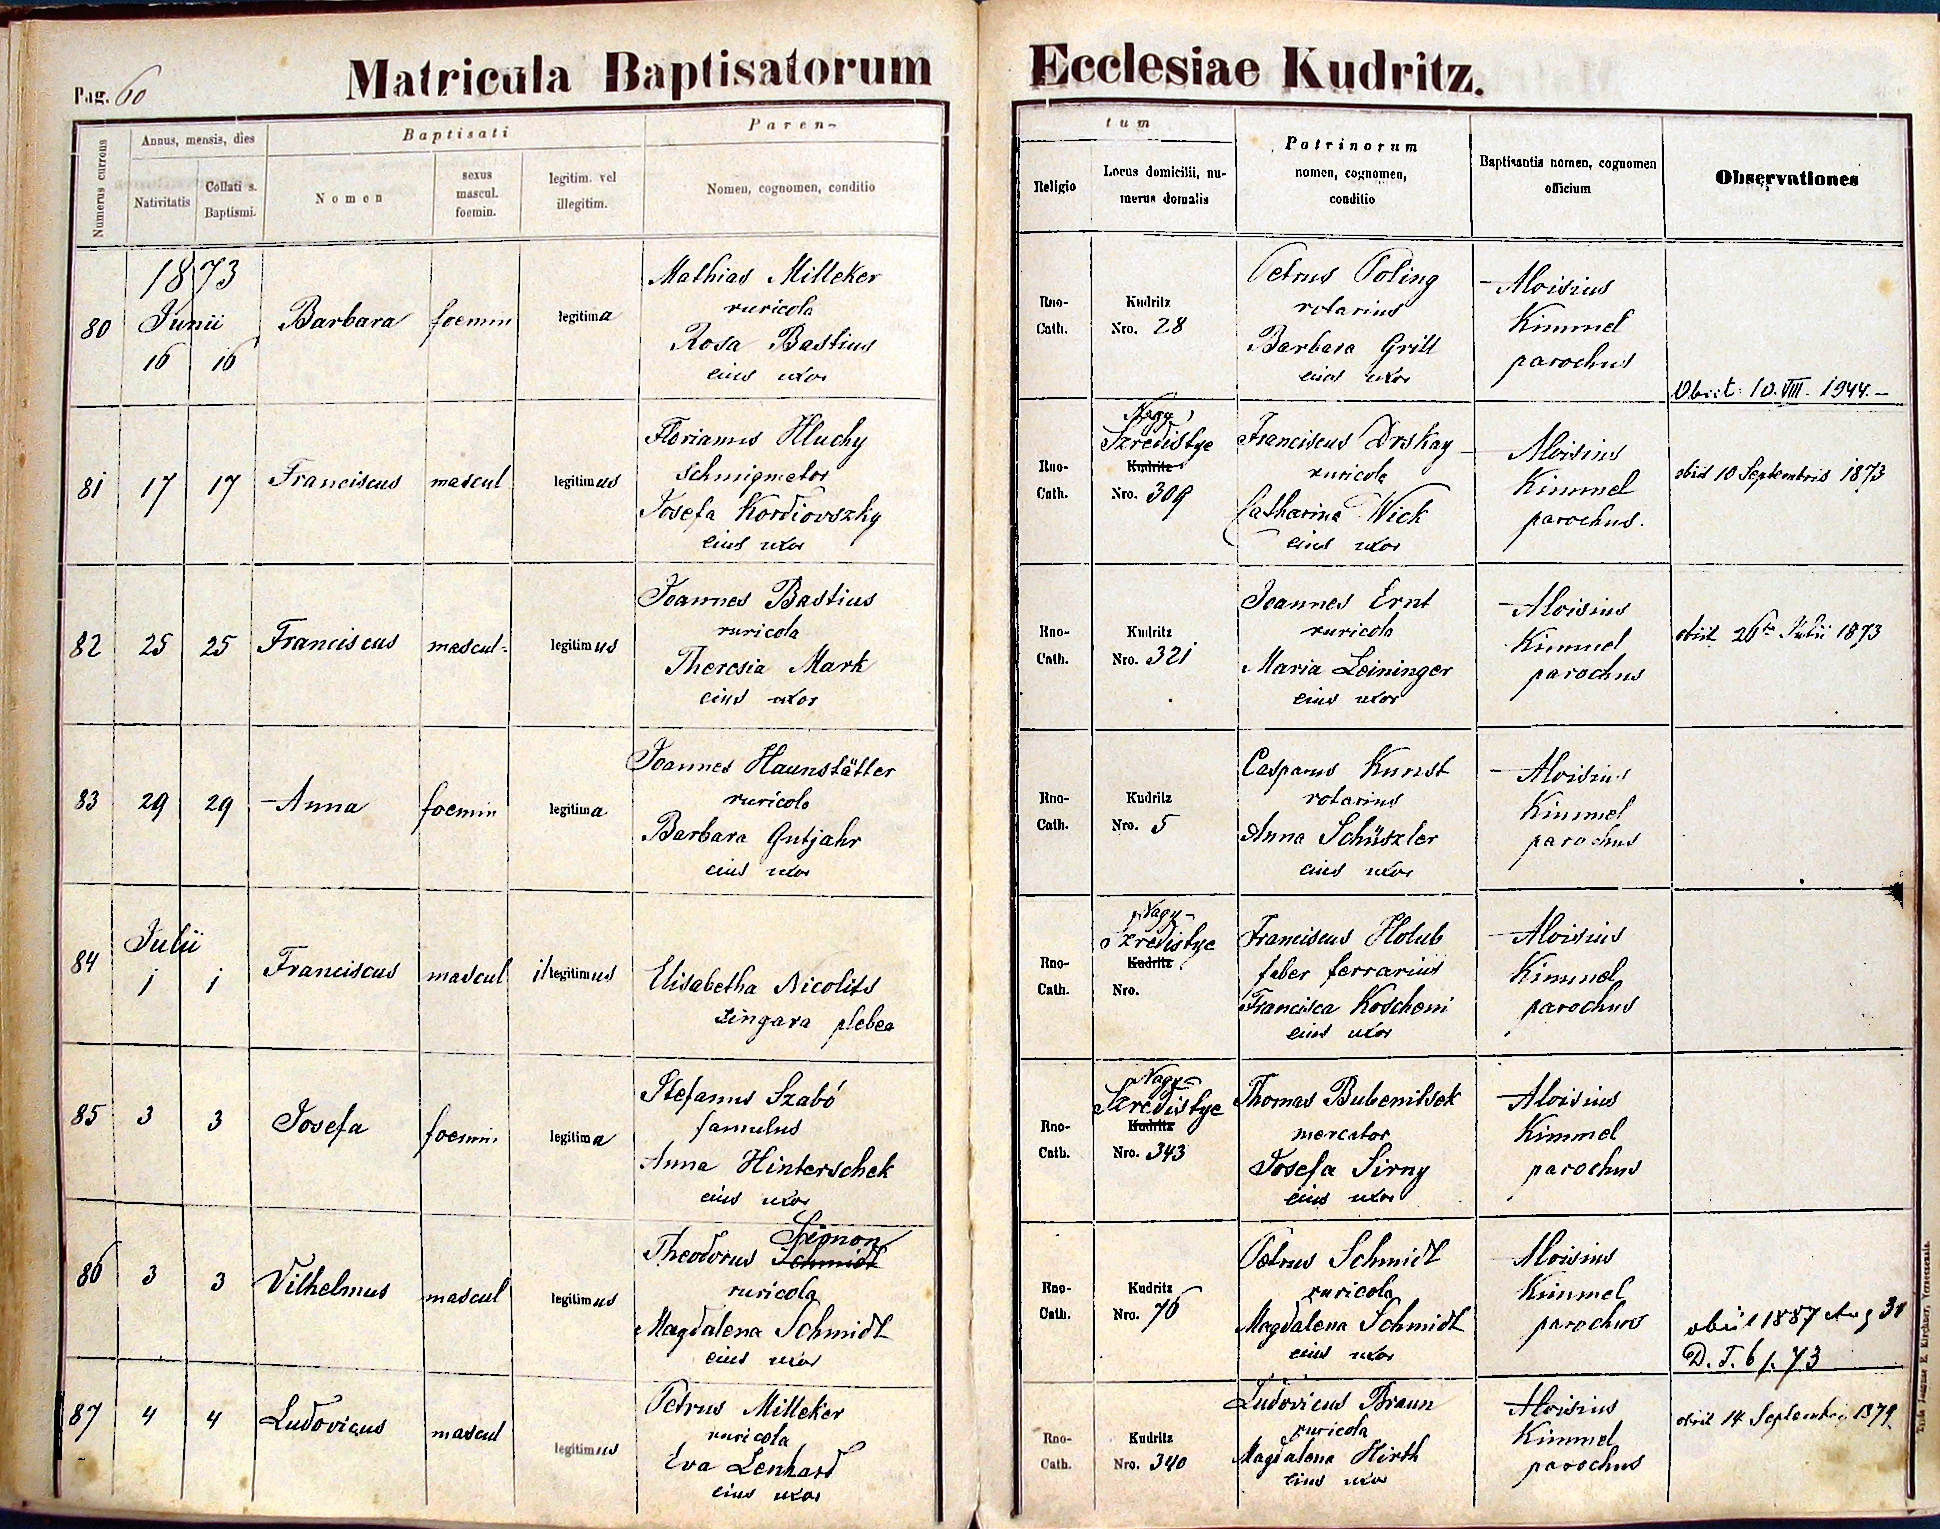 images/church_records/BIRTHS/1884-1899B/1887/060